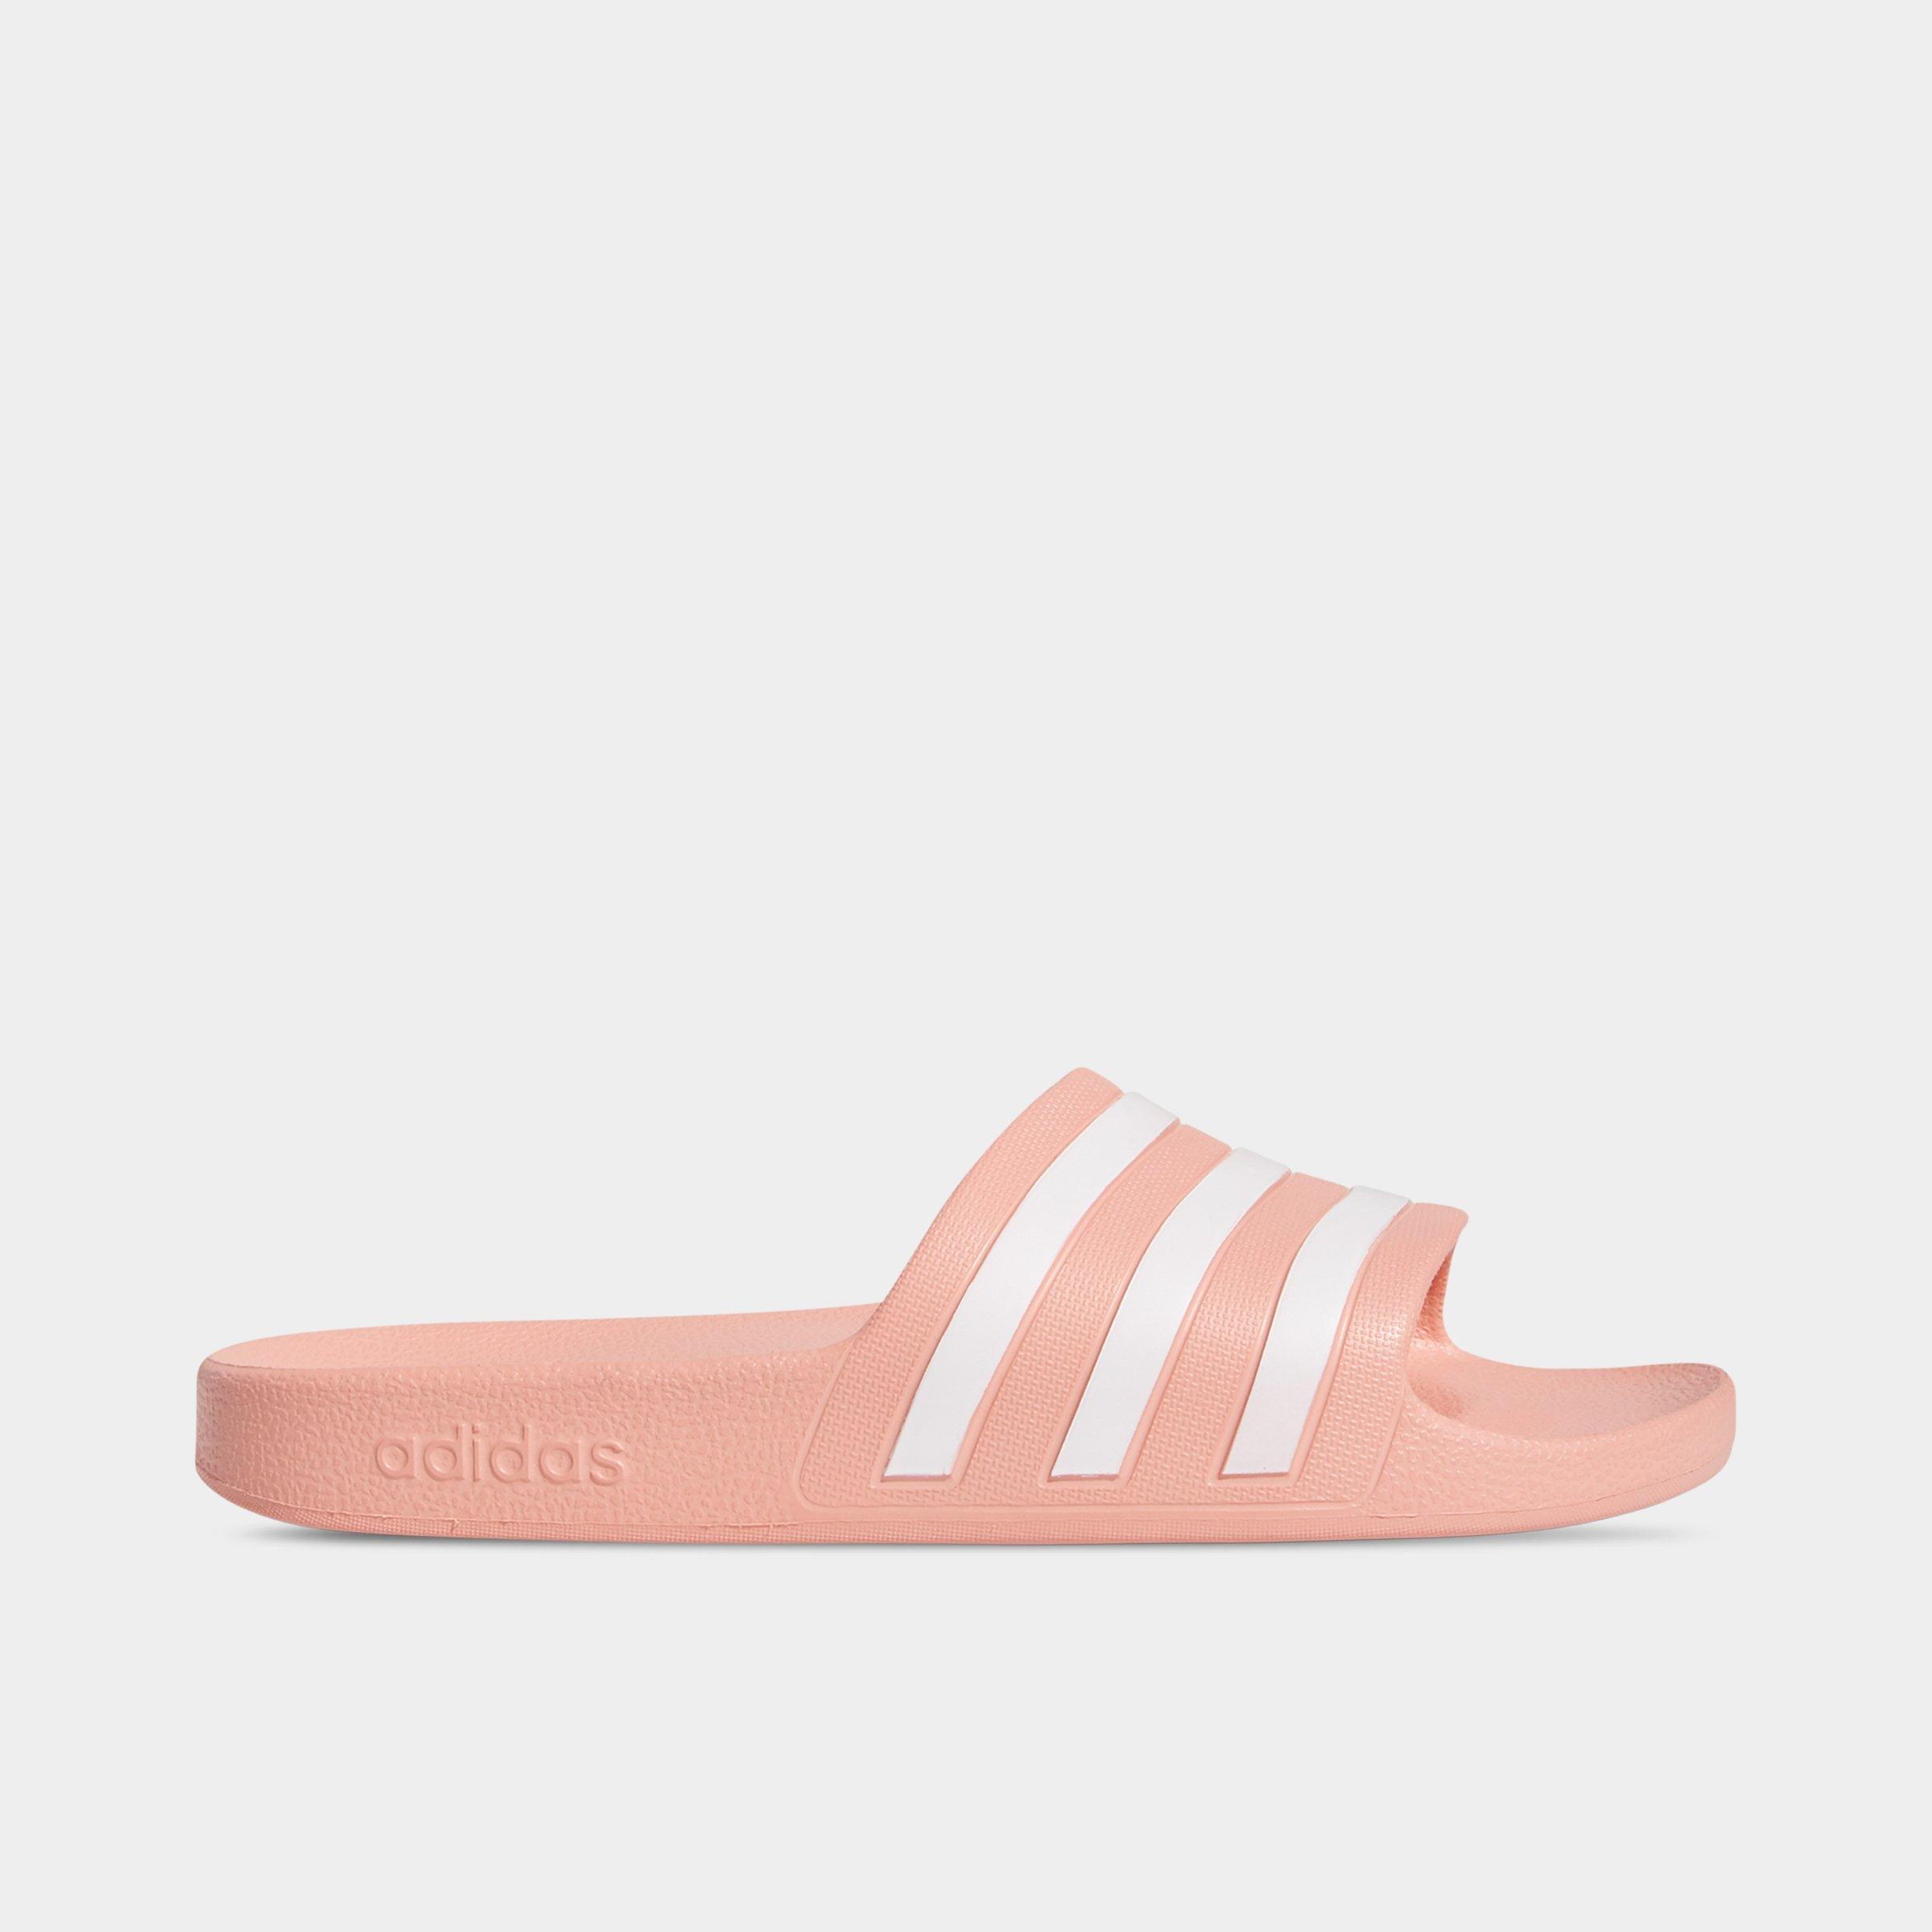 adidas slides womens pink